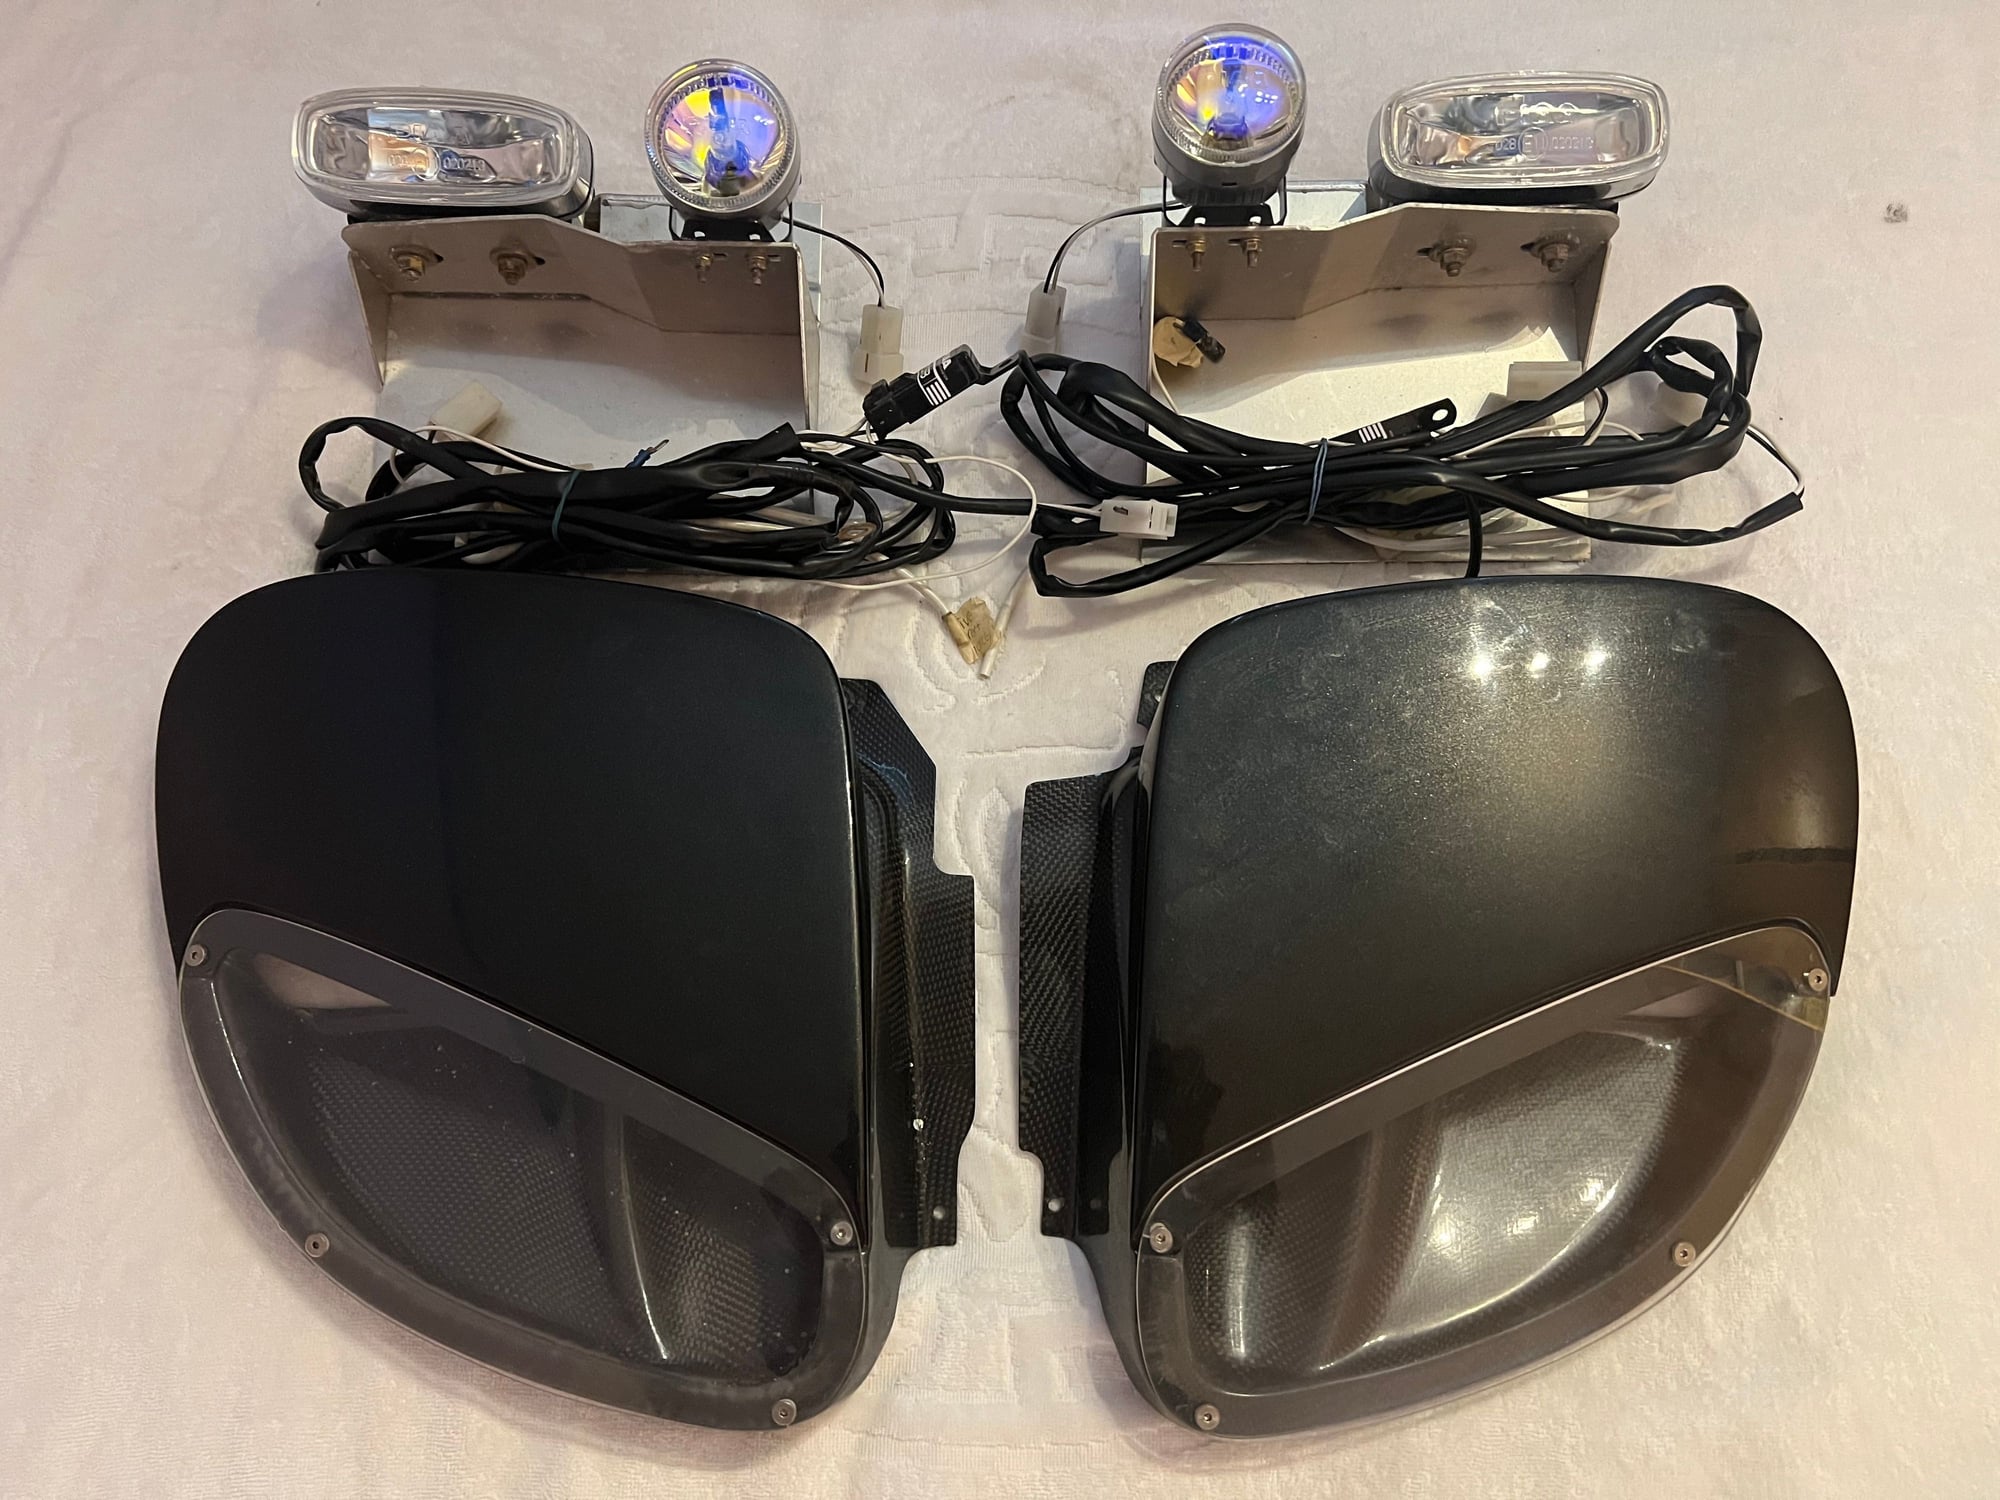 Exterior Body Parts - Original R-Magic H3 Headlight Kit w/ Carbon Bases - Used - 1992 to 2002 Mazda RX-7 - London HA27DY, United Kingdom